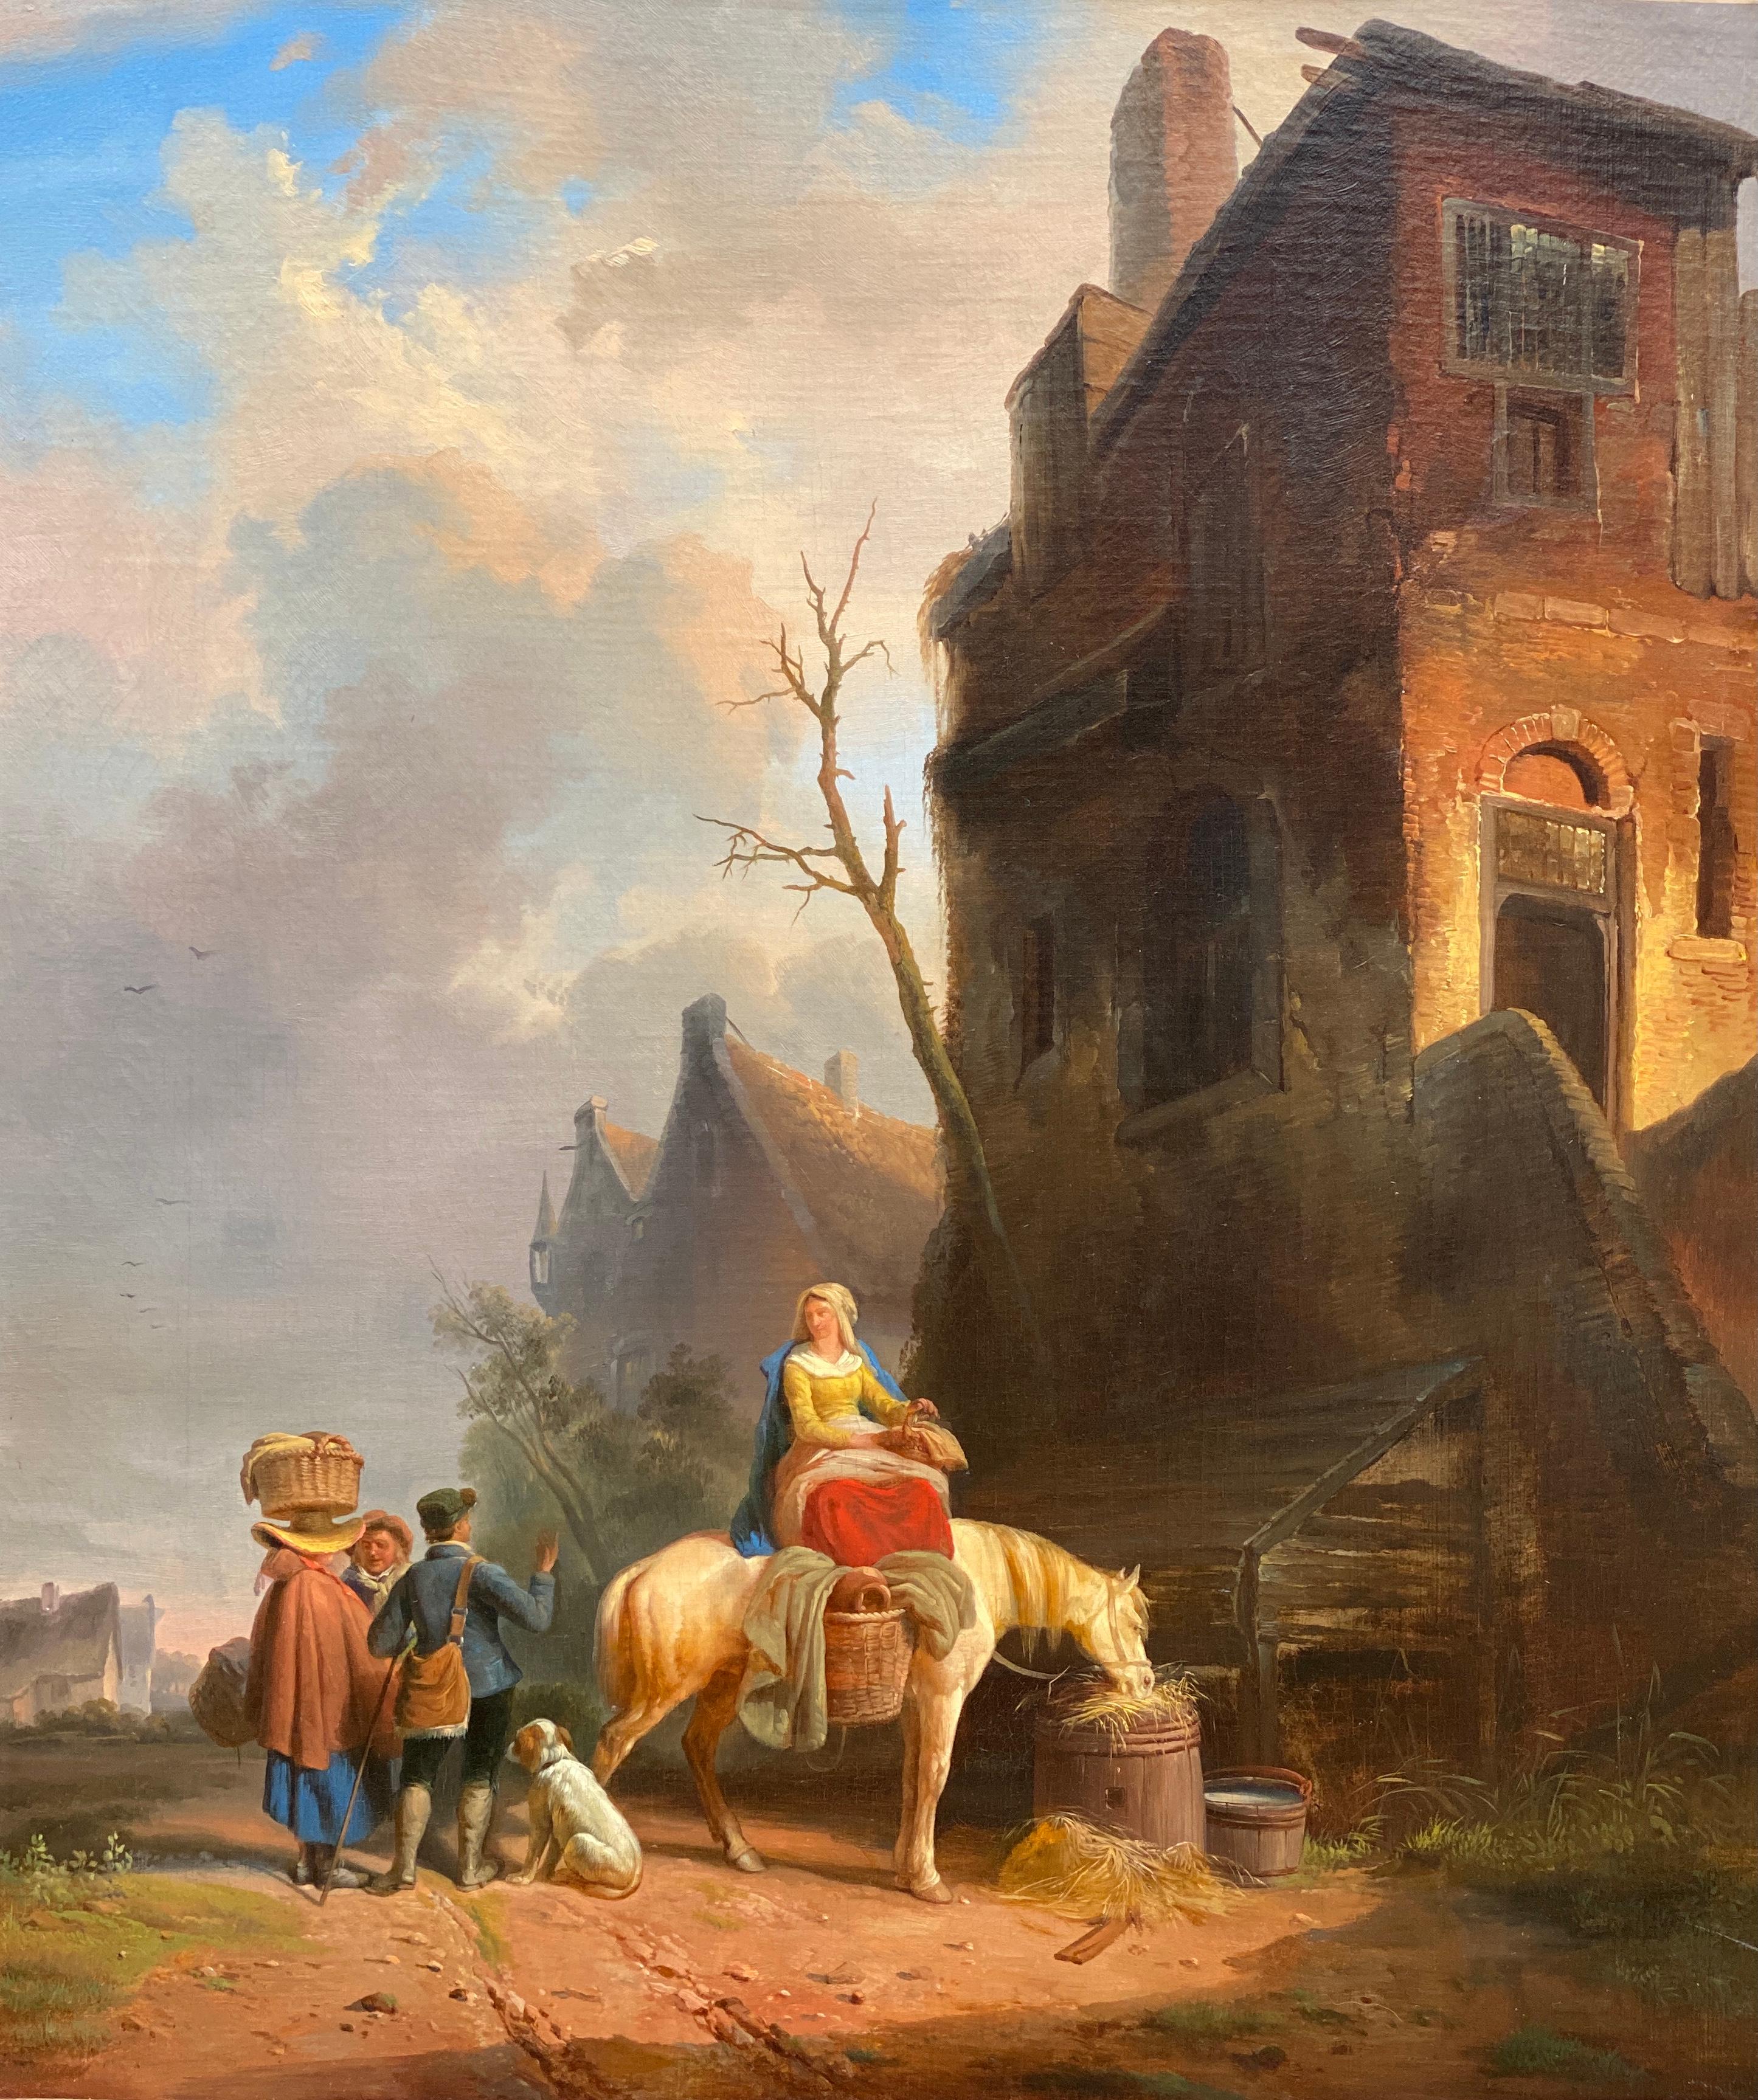 Attributed to Ferdinand Marinus, 1808 – 1890, Belgian Painter, Oil on Canvas